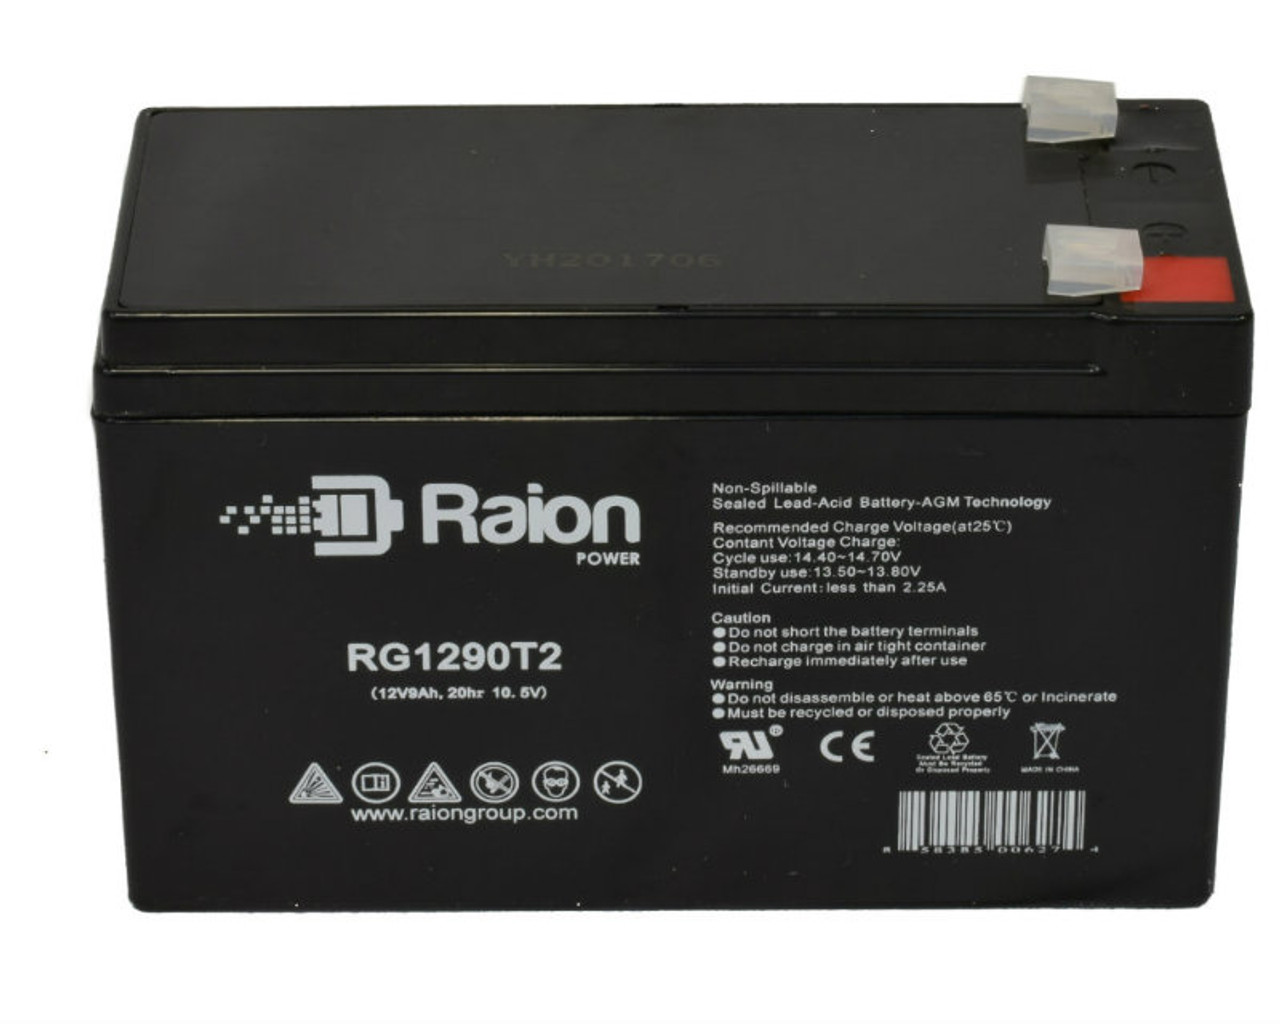 Raion Power RG1290T2 12V 9Ah Lead Acid Battery for ION Audio Party Rocker Portable Speaker